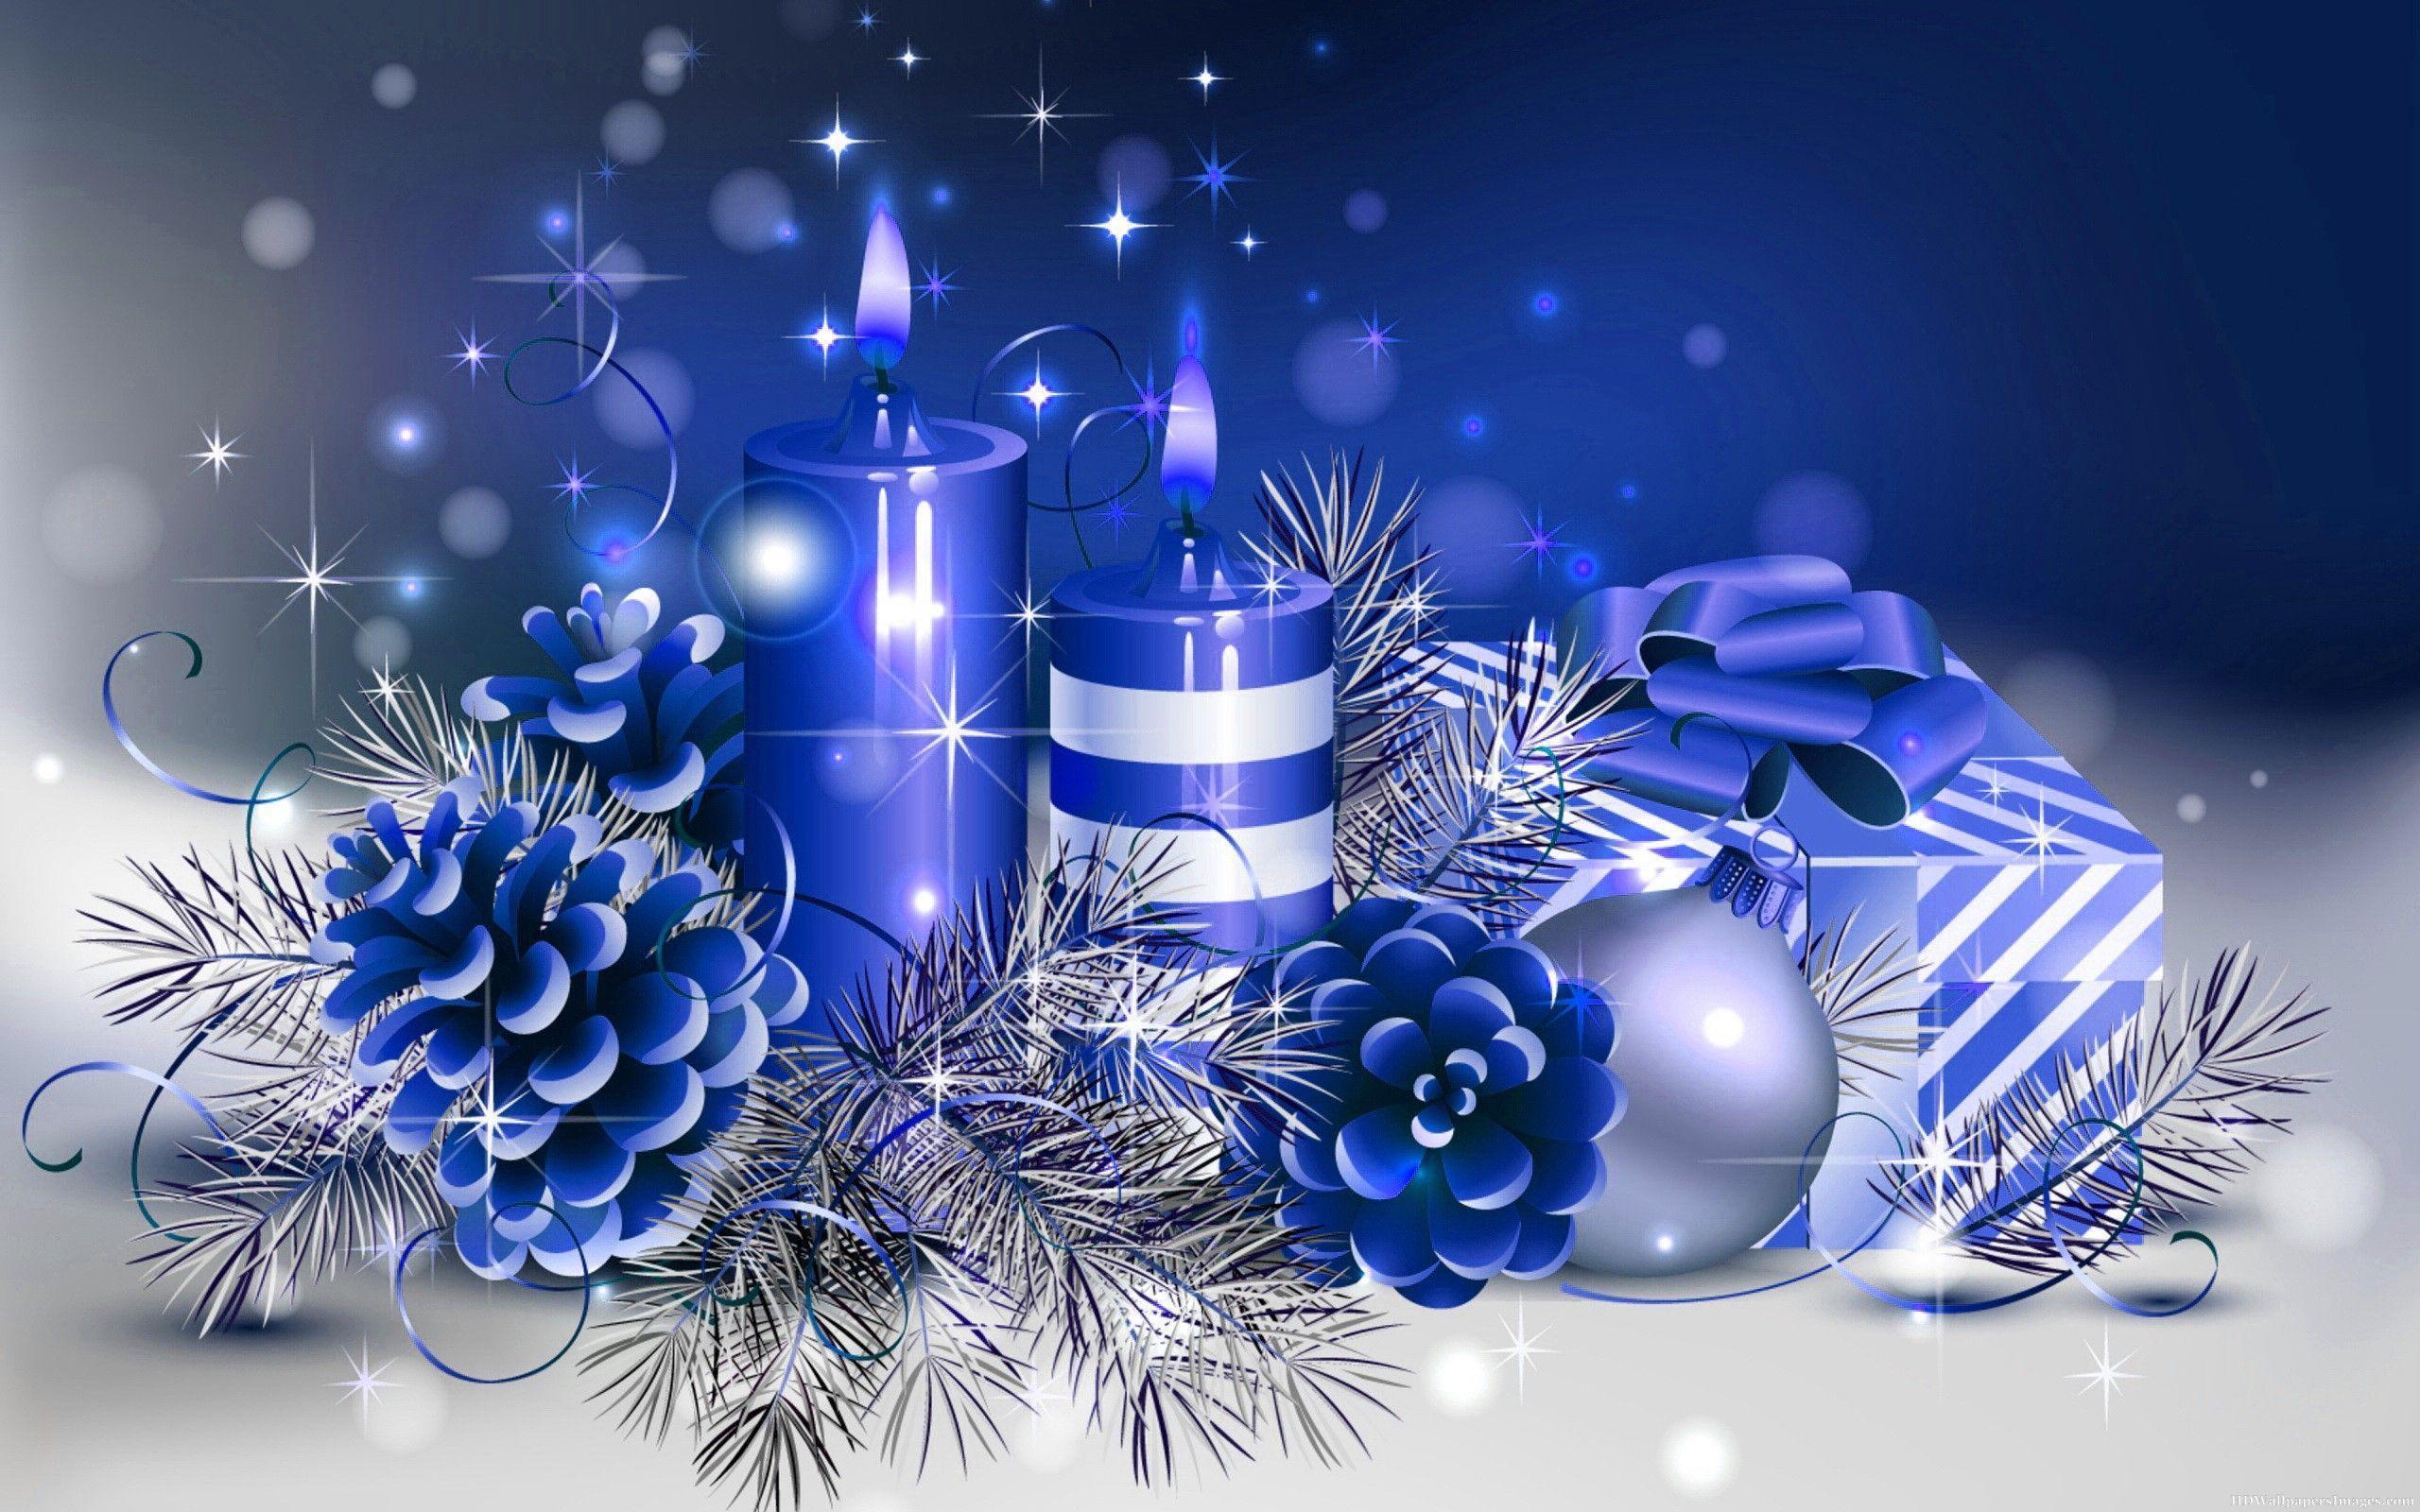 Blue Christmas Desktop Background Image. HD Wallpaper Image